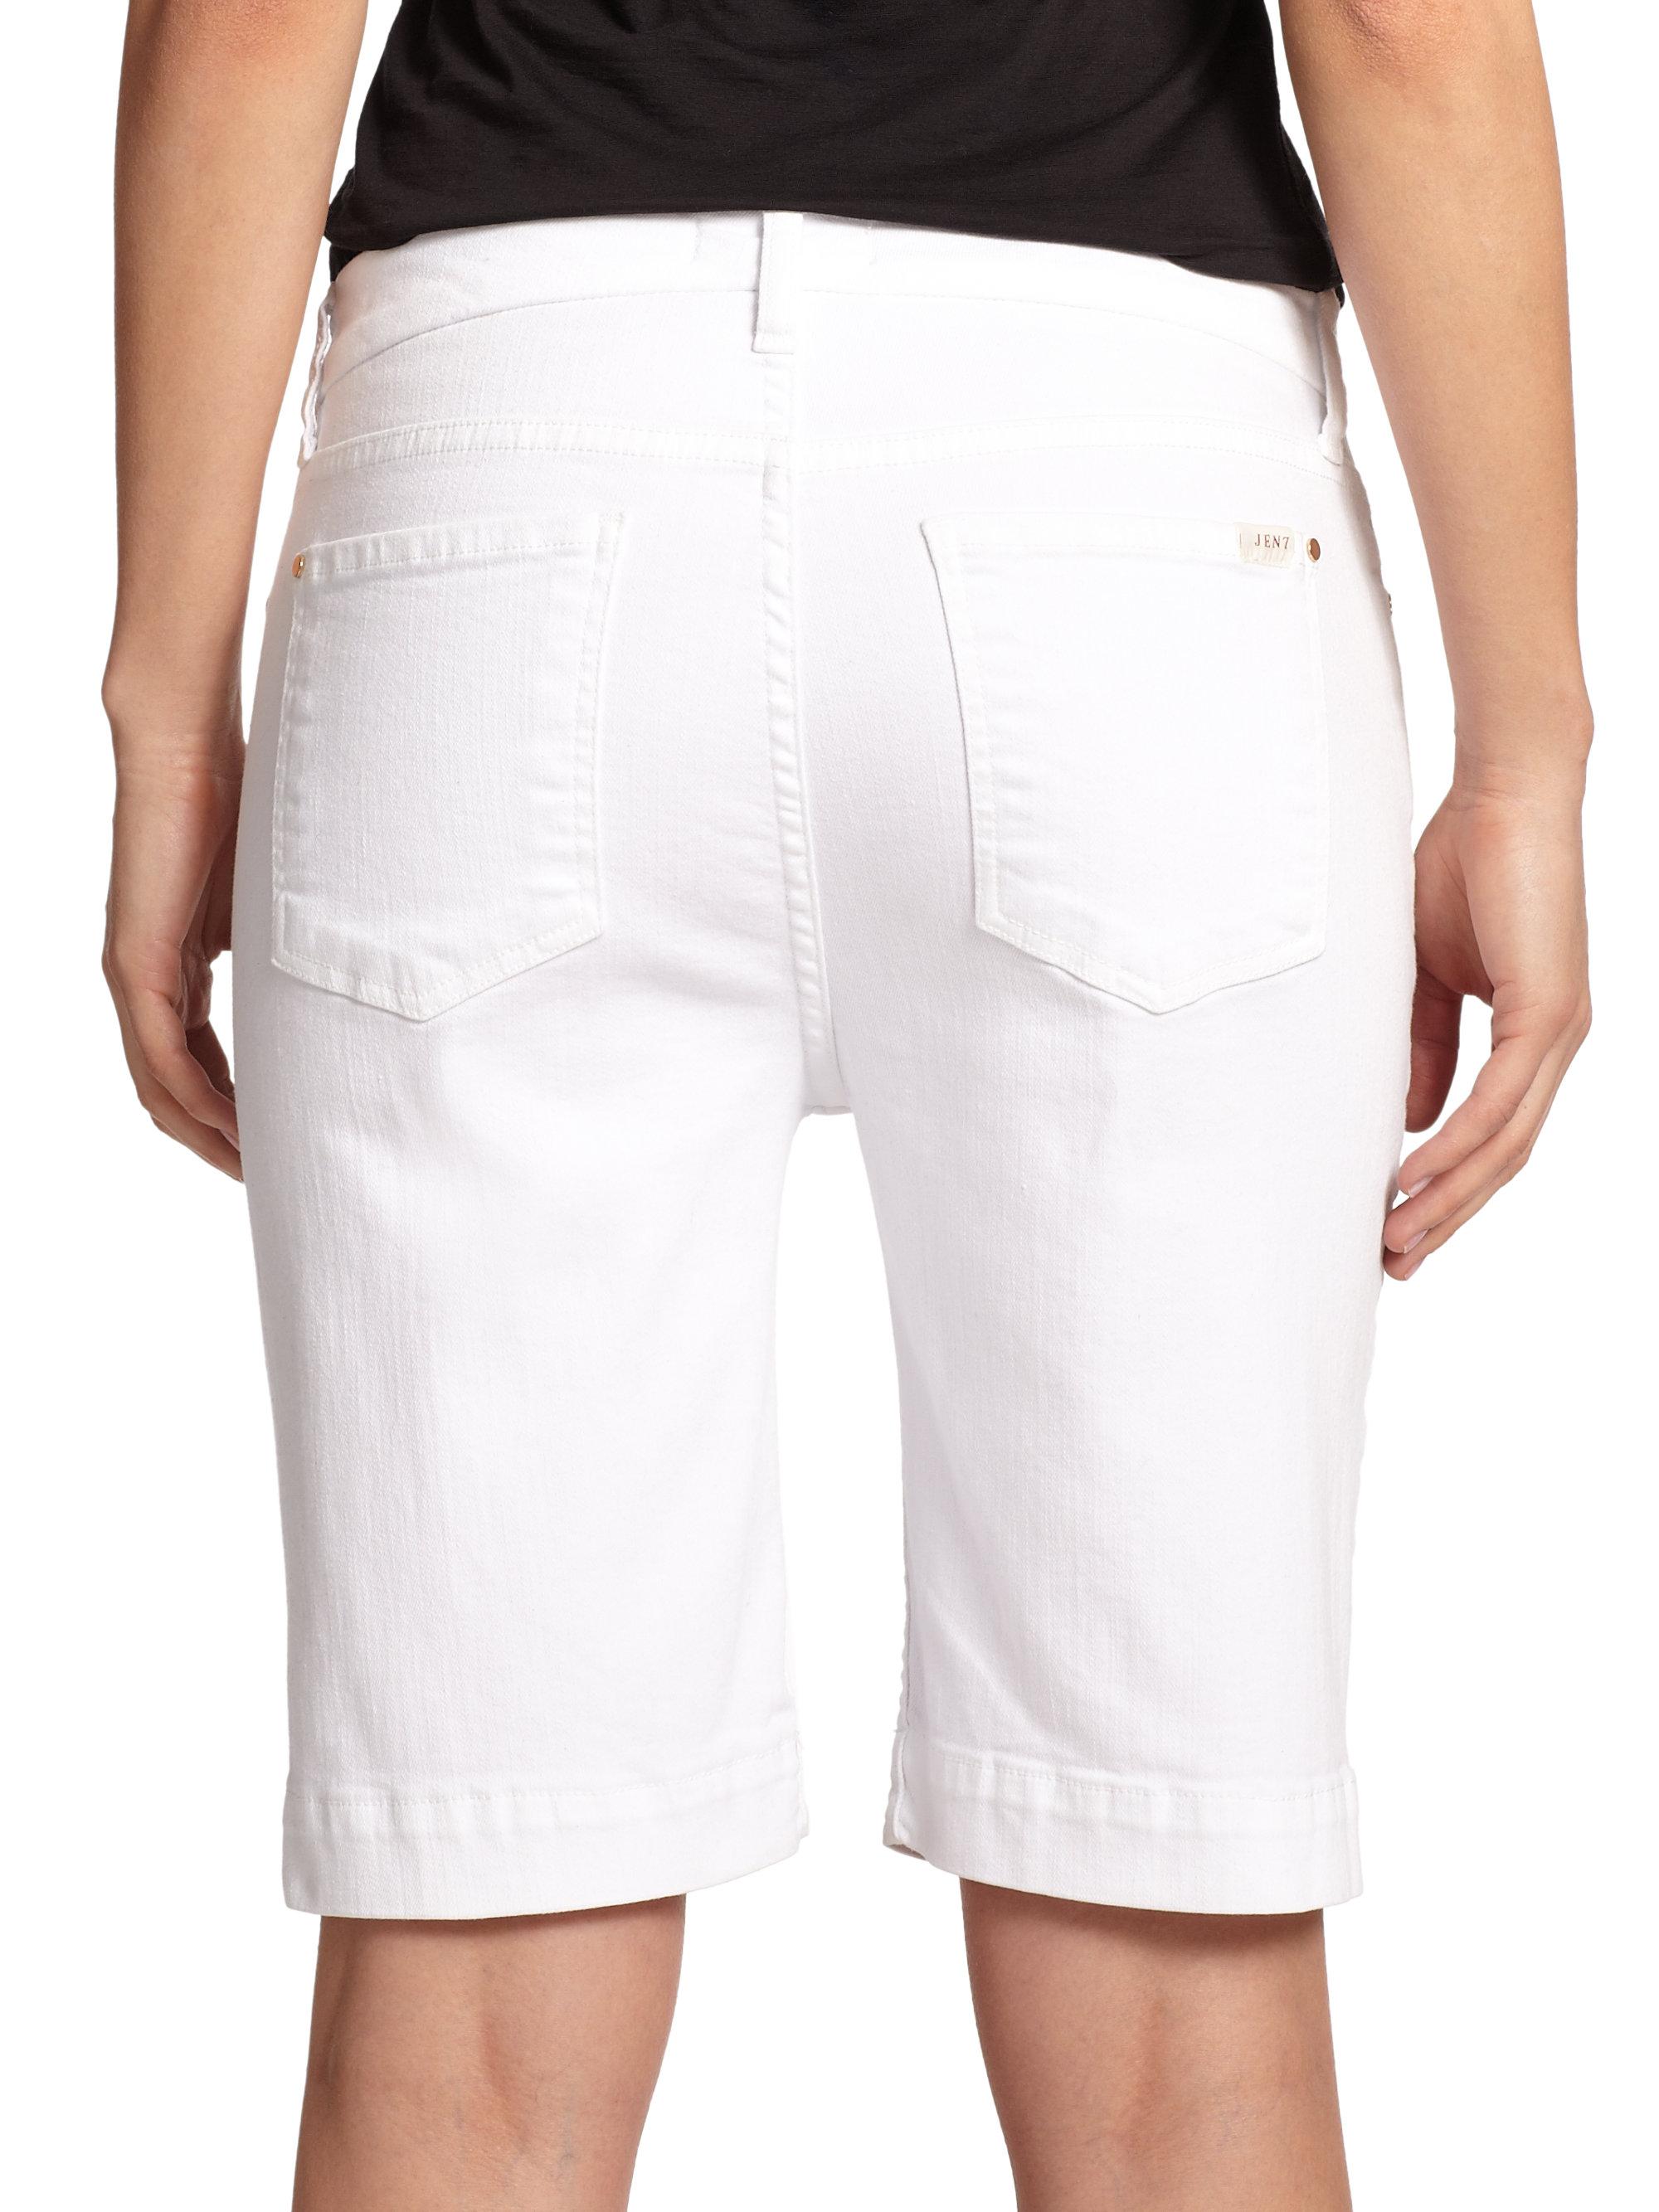 7 For All Mankind Denim Bermuda Shorts in White Denim (White) - Lyst